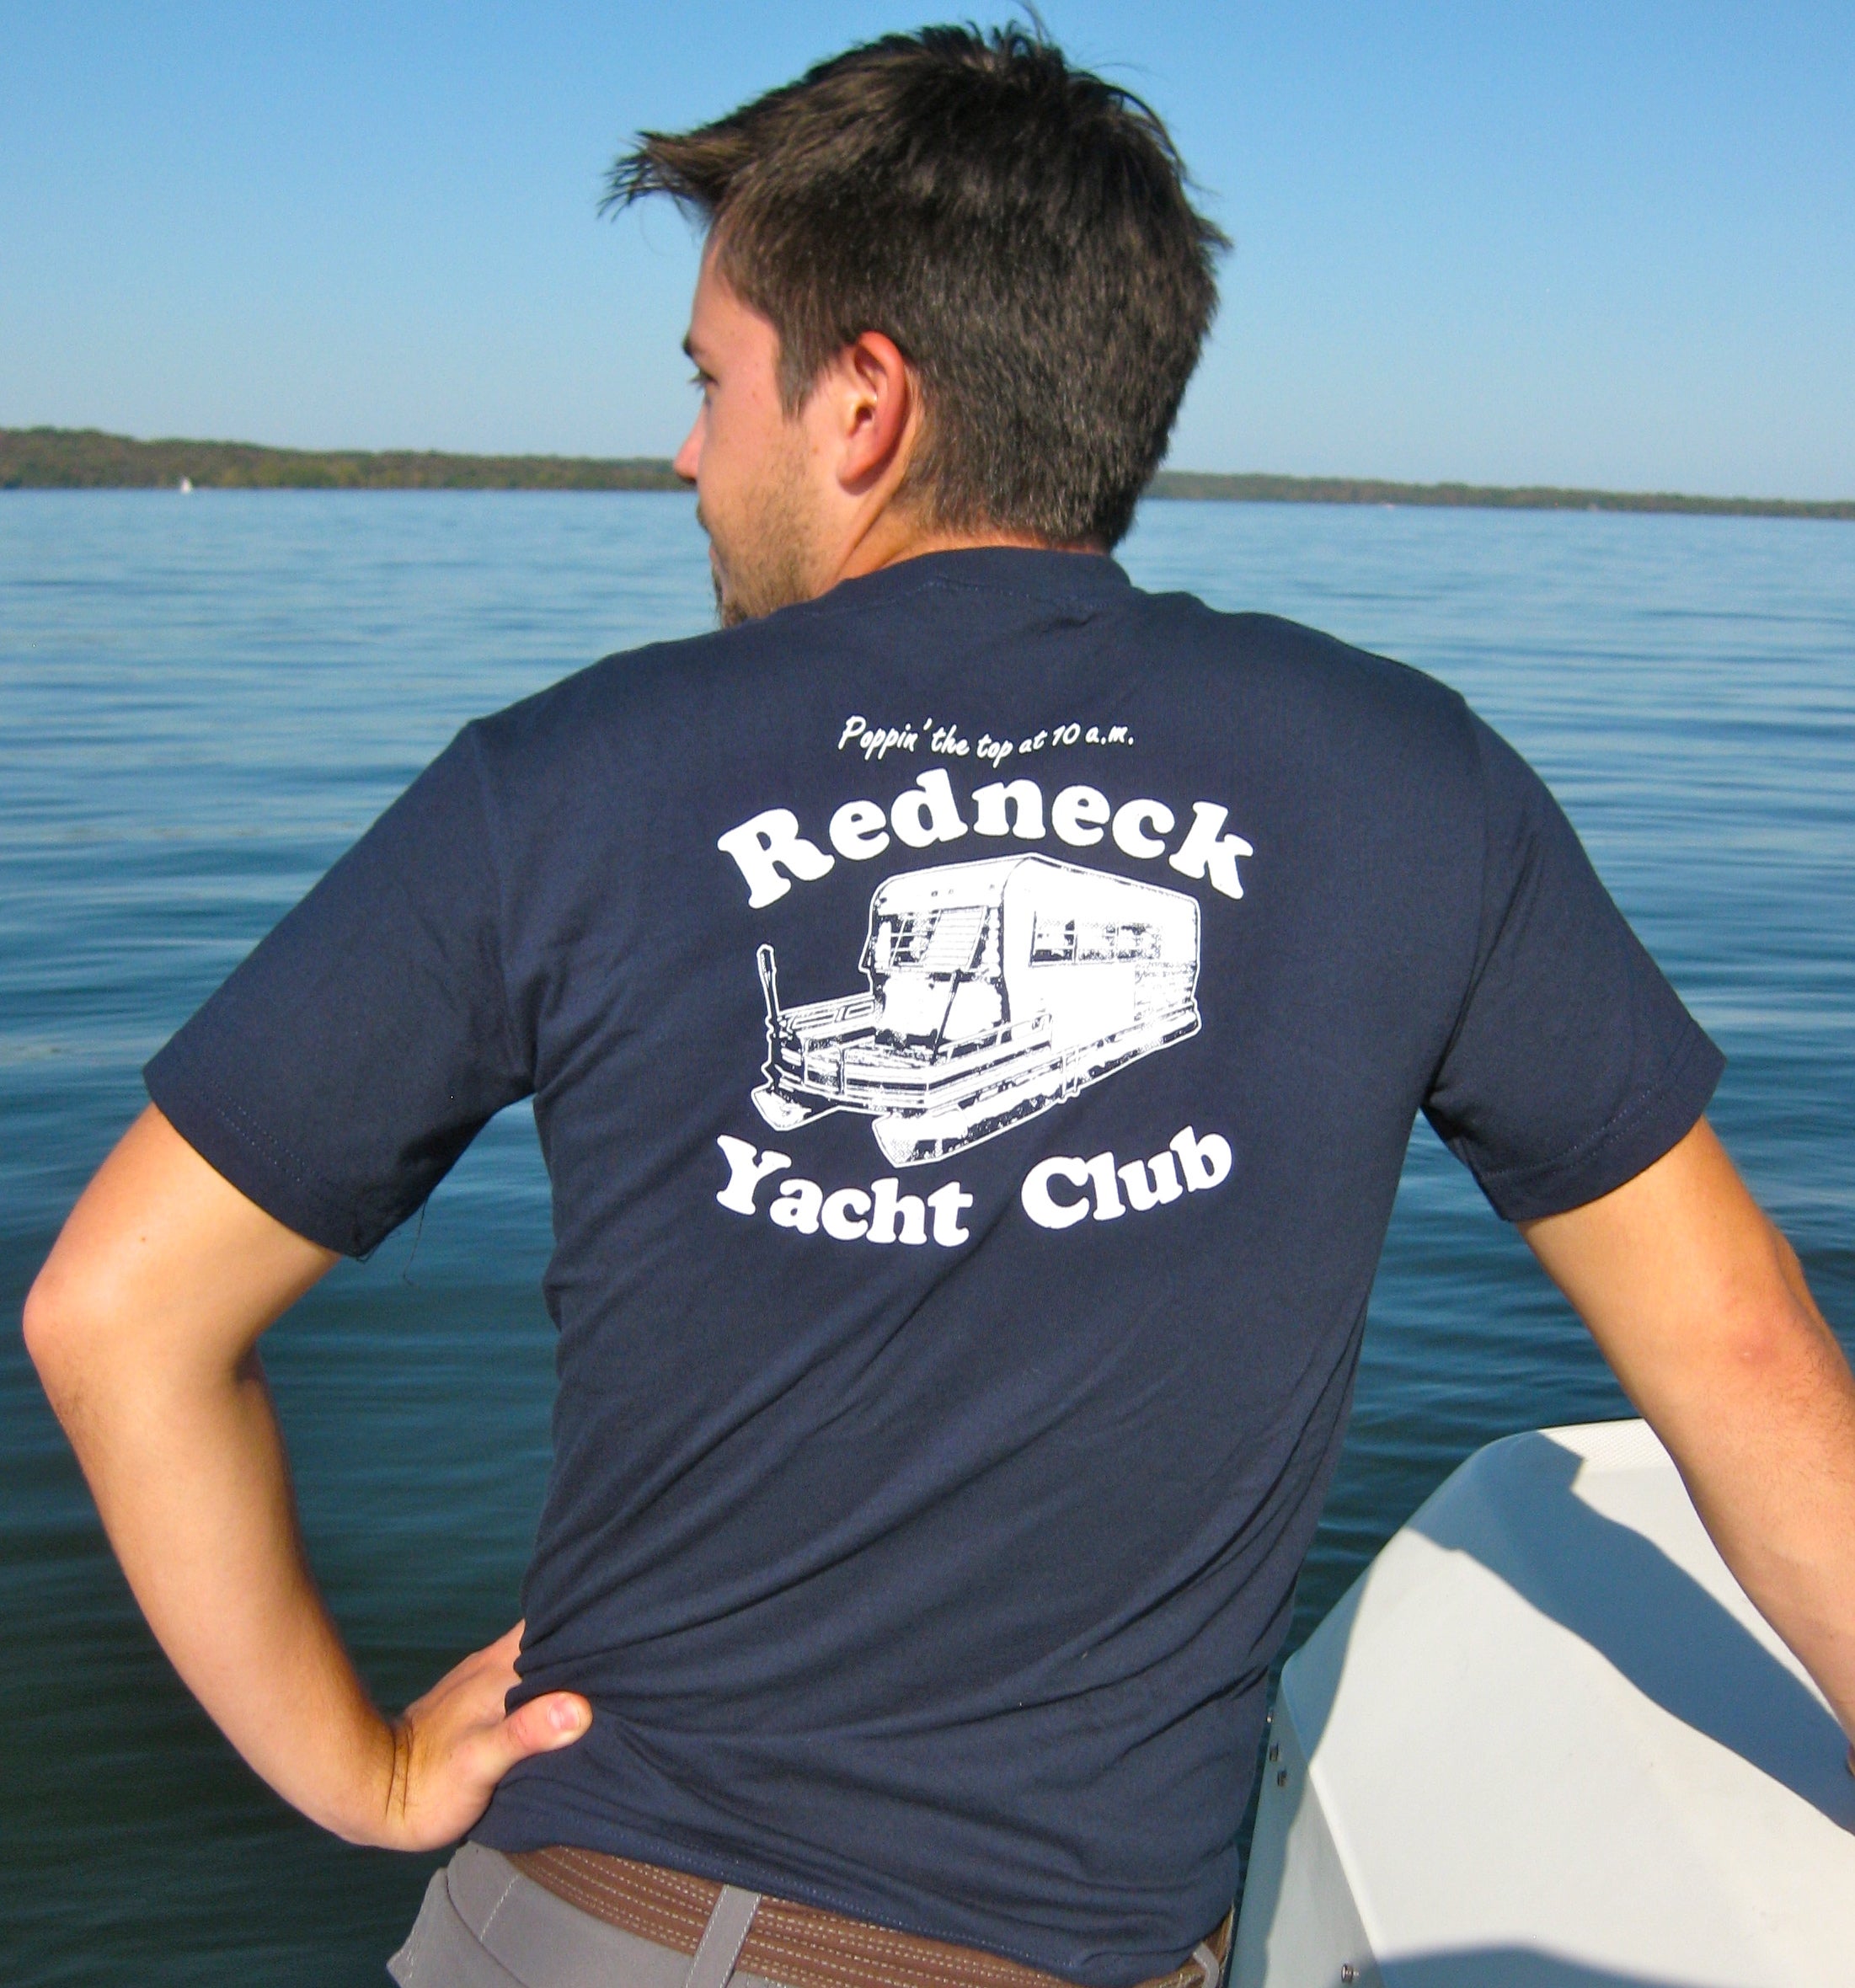 redneck yacht club logo